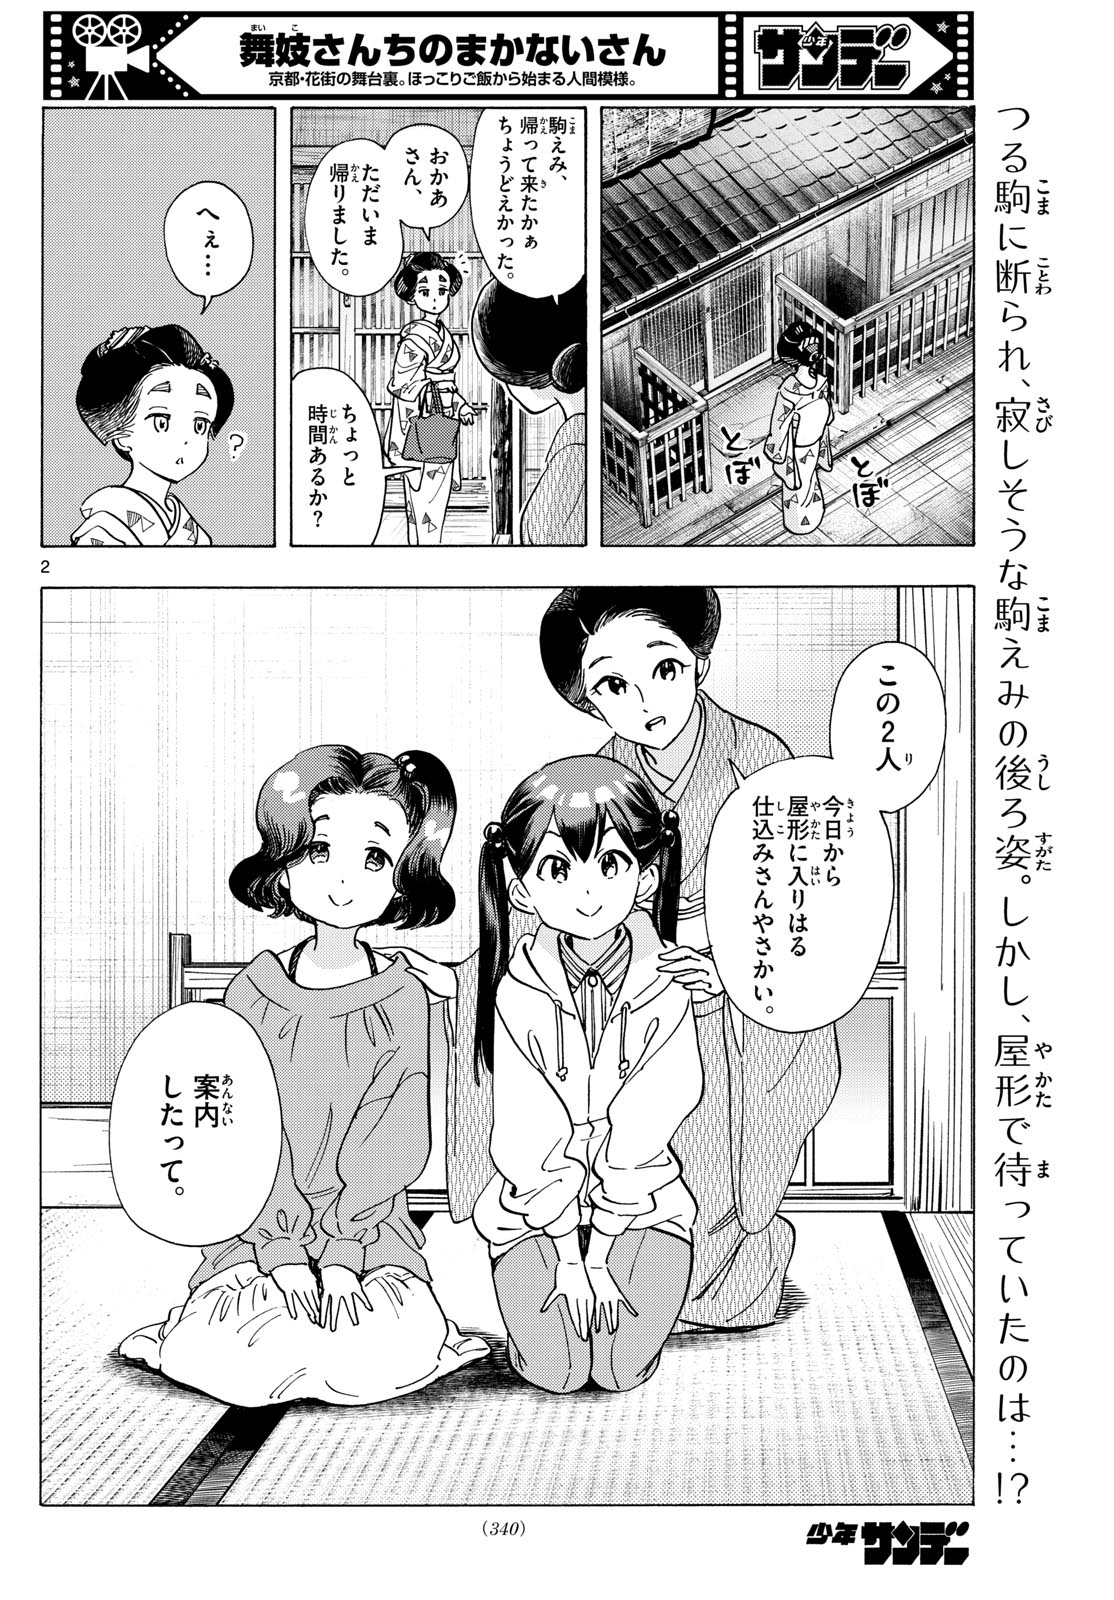 Maiko-san Chi no Makanai-san - Chapter 288 - Page 2